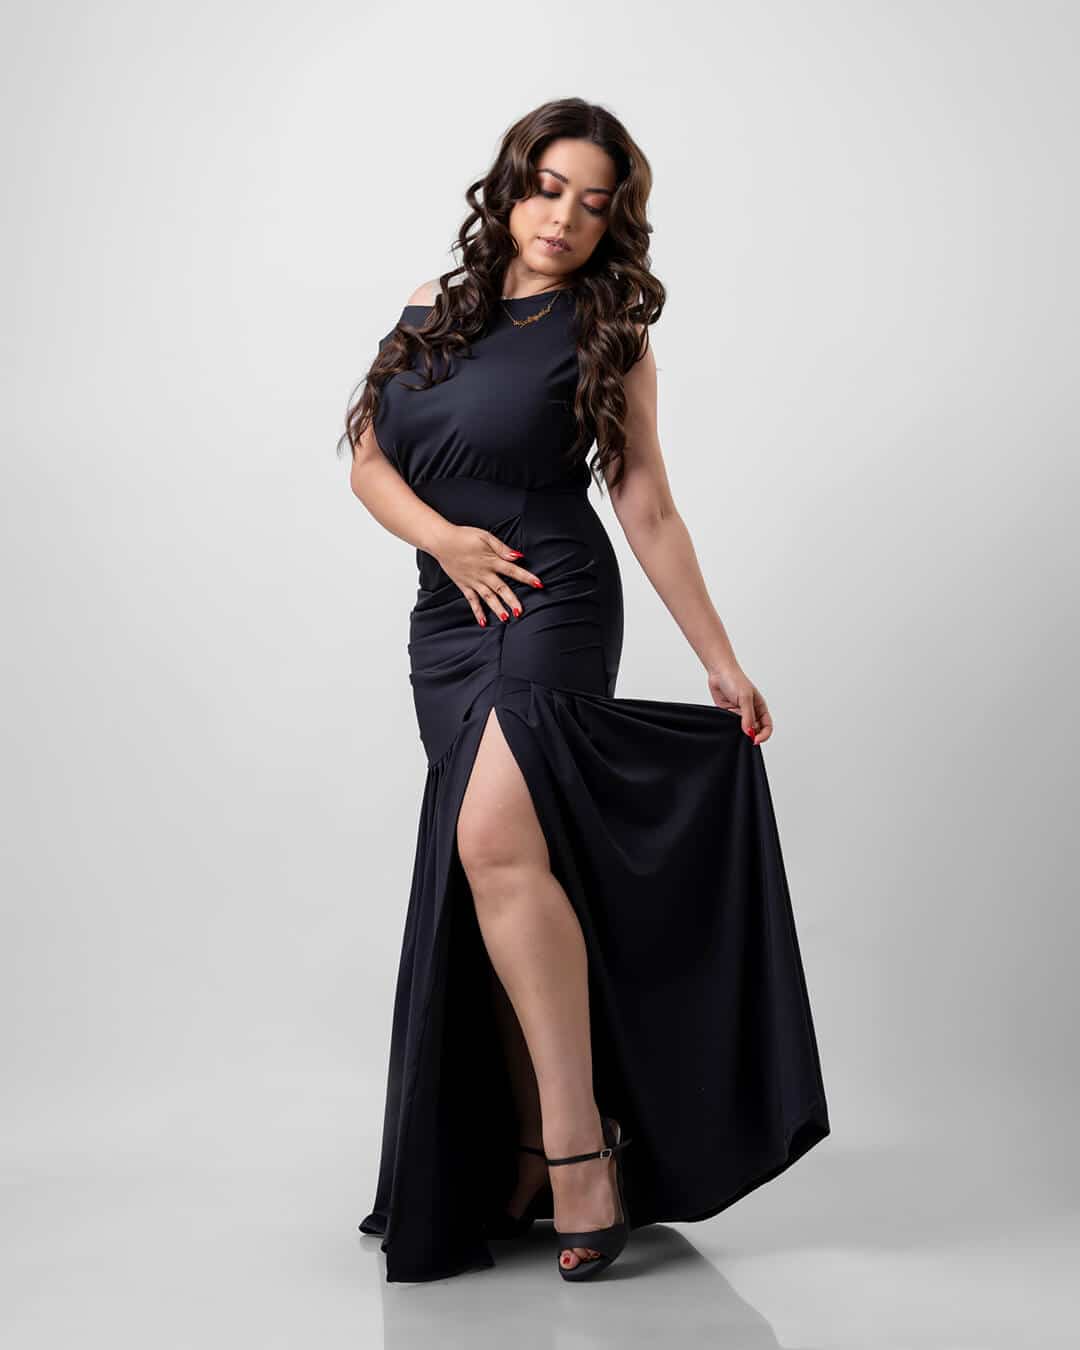 Zeela Luxe Black Dress